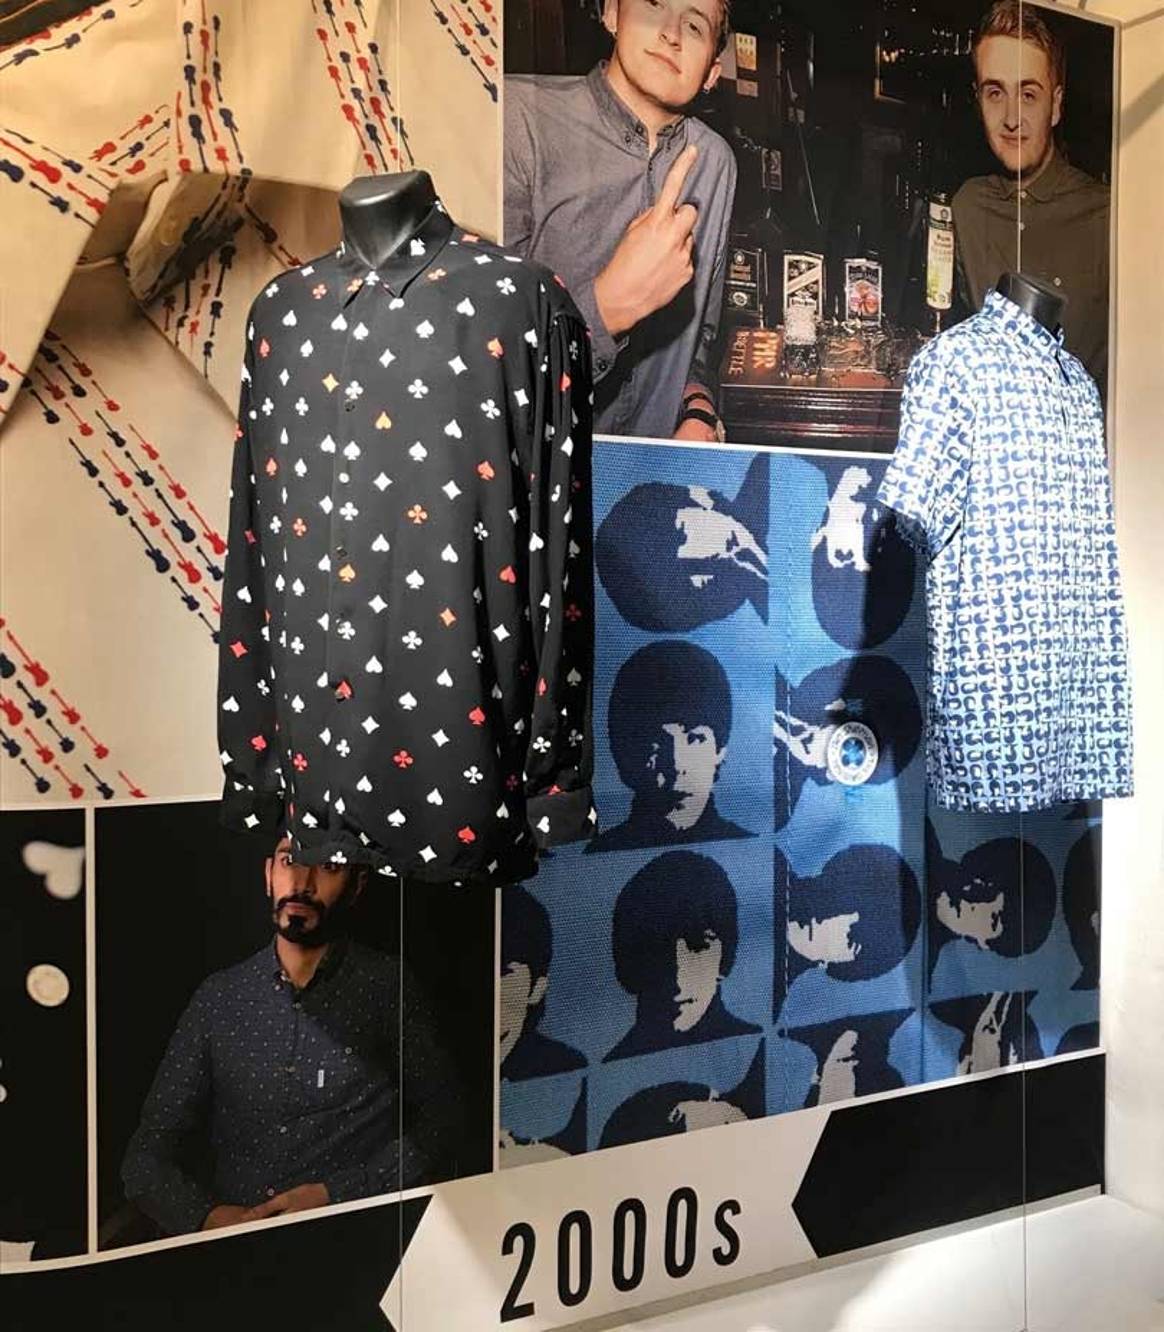 Ben Sherman returns to Pitti Uomo with shirt heritage exhibition